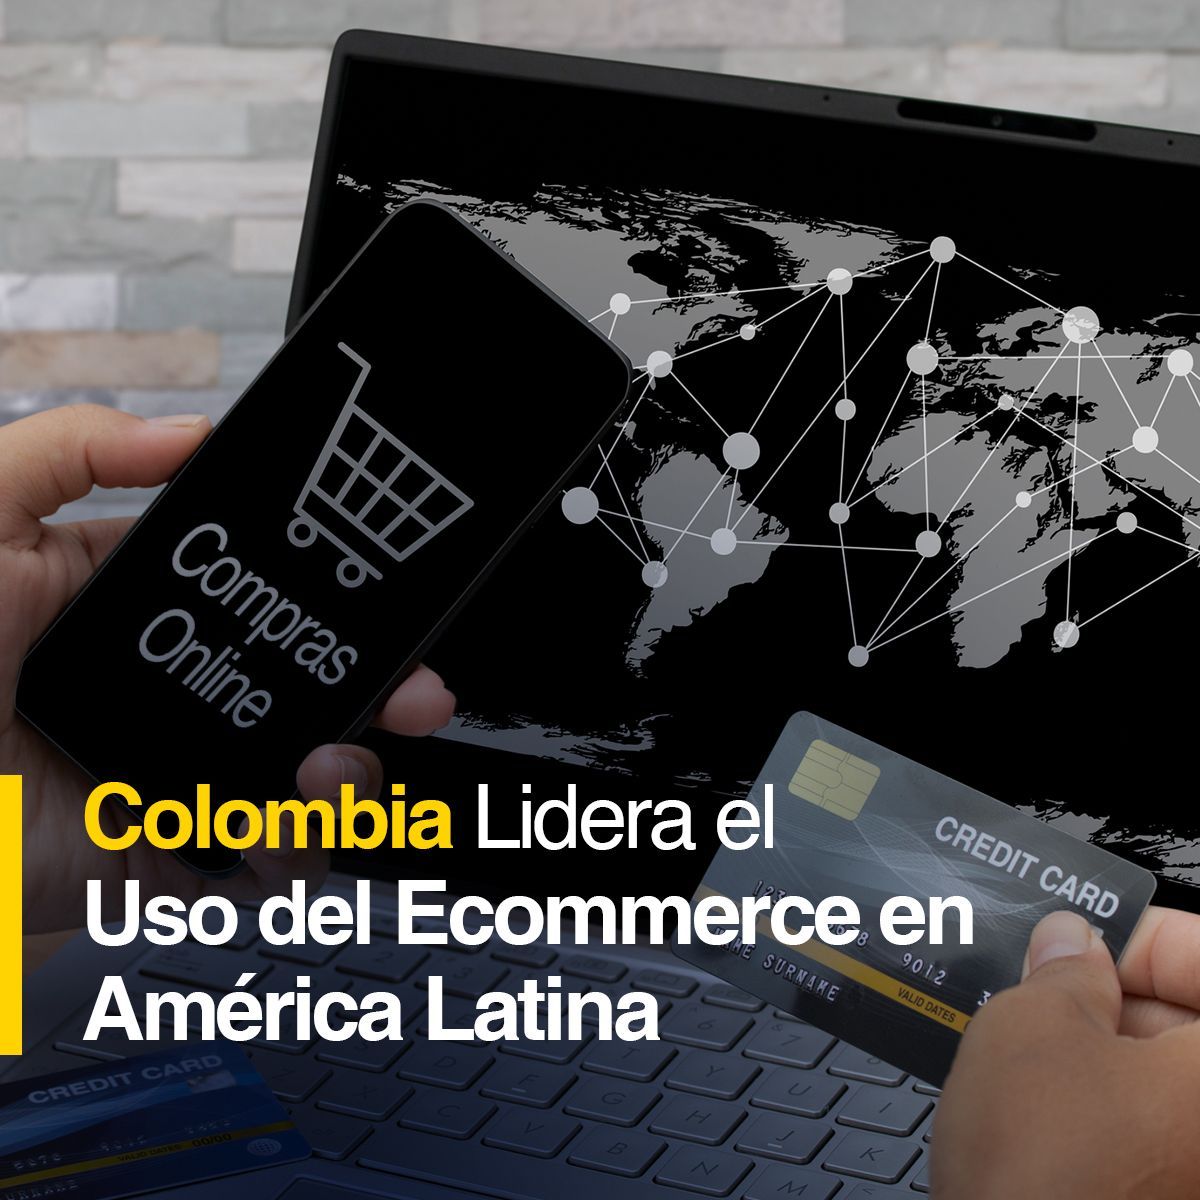 Colombia Lidera el Uso del Ecommerce en América Latina